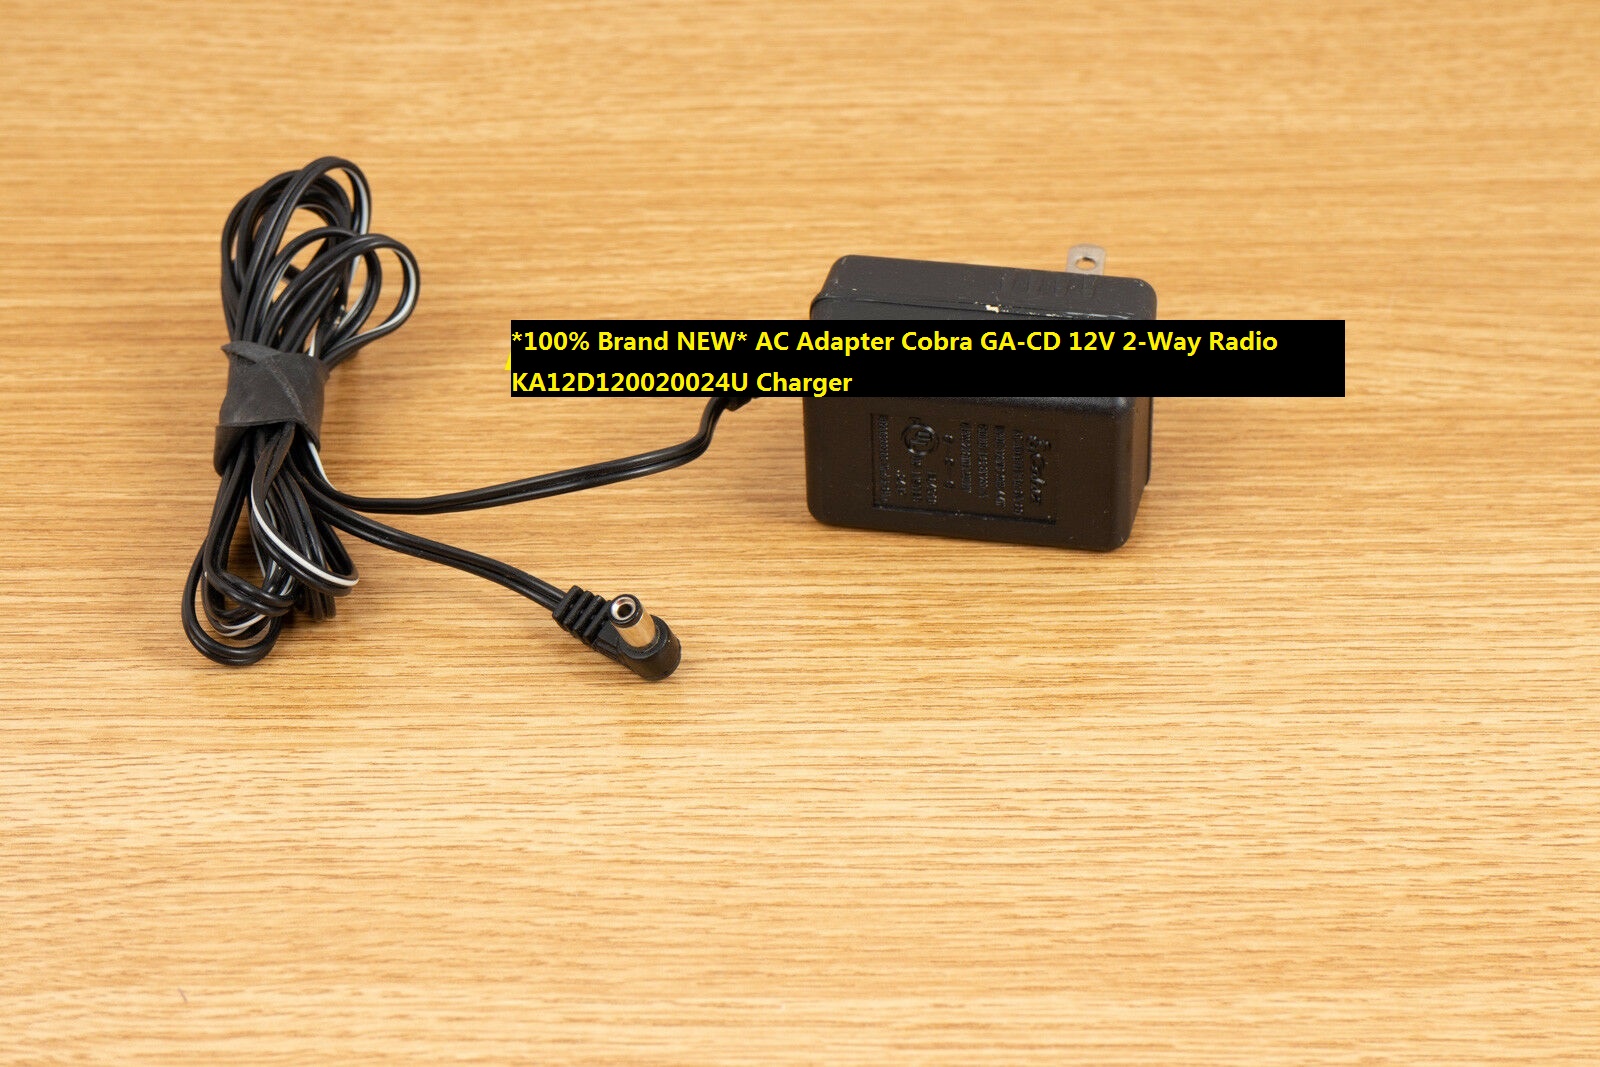 *100% Brand NEW* AC Adapter Cobra GA-CD 12V 2-Way Radio KA12D120020024U Charger